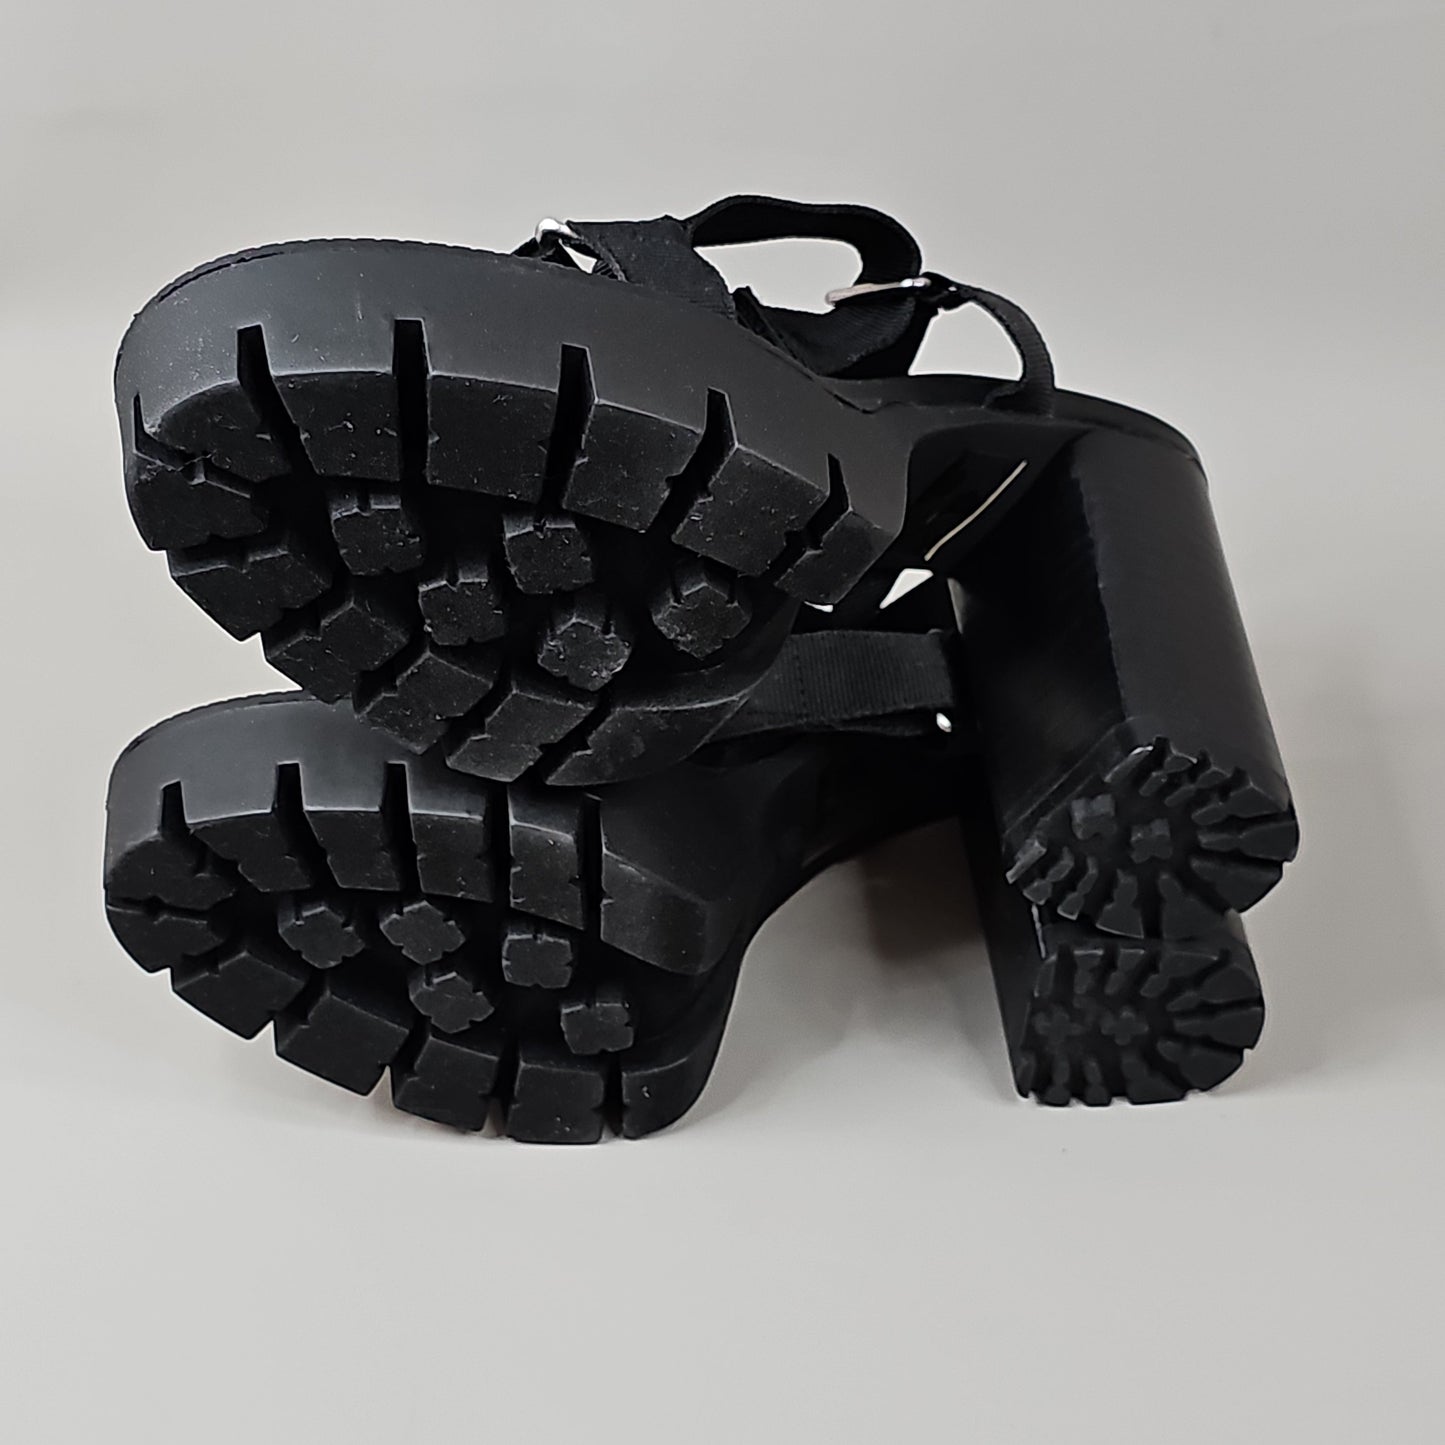 CHARLES BY CHARLES DAVID Women's Vast Sport Sandal Shoe Sz 10 M Black (New)